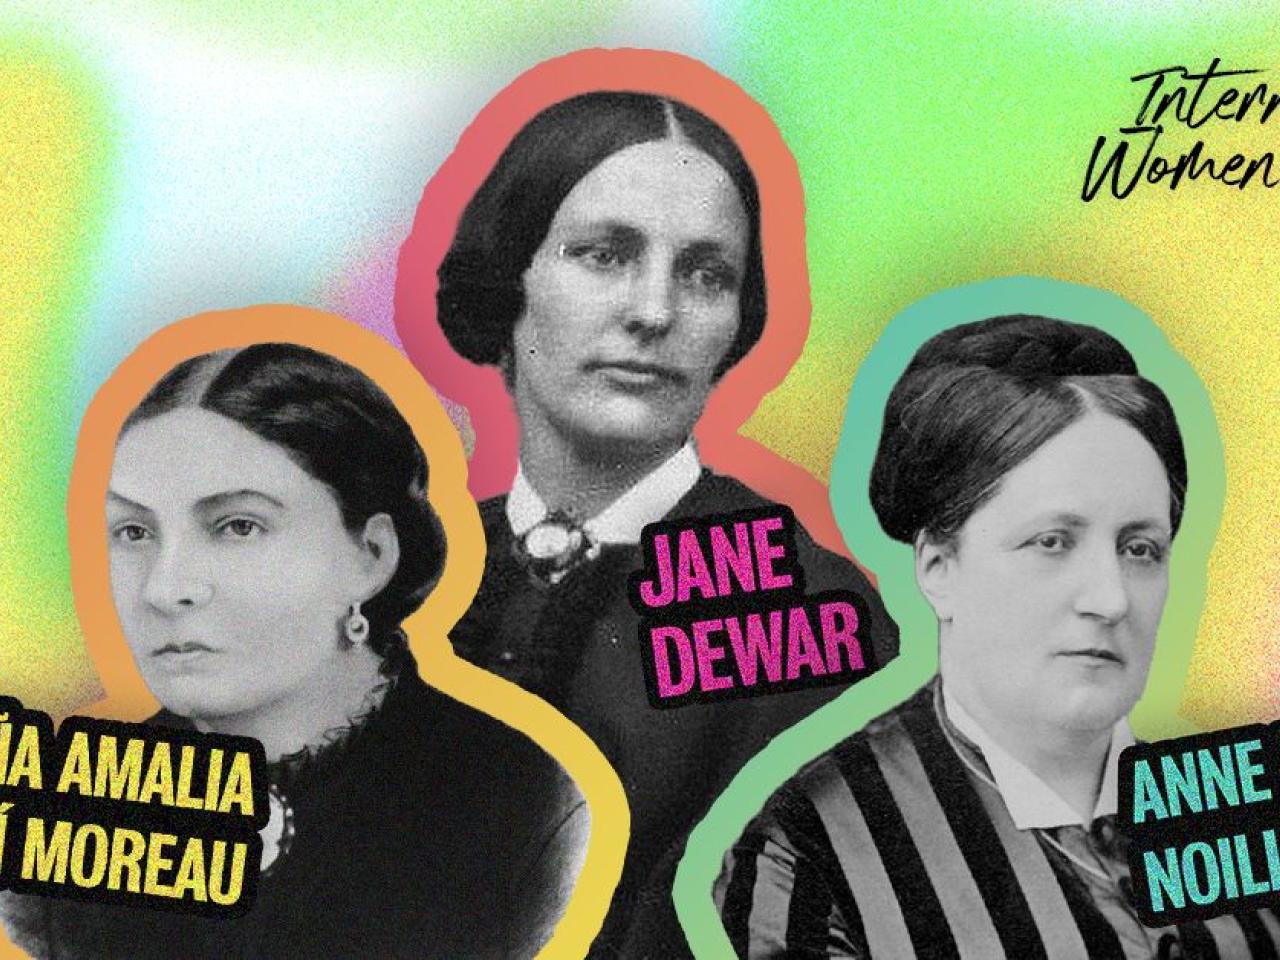 Photos of Jane Dewar, Doña Amalia Bacardí Moreau, and Anne Rosine Noilly Prat